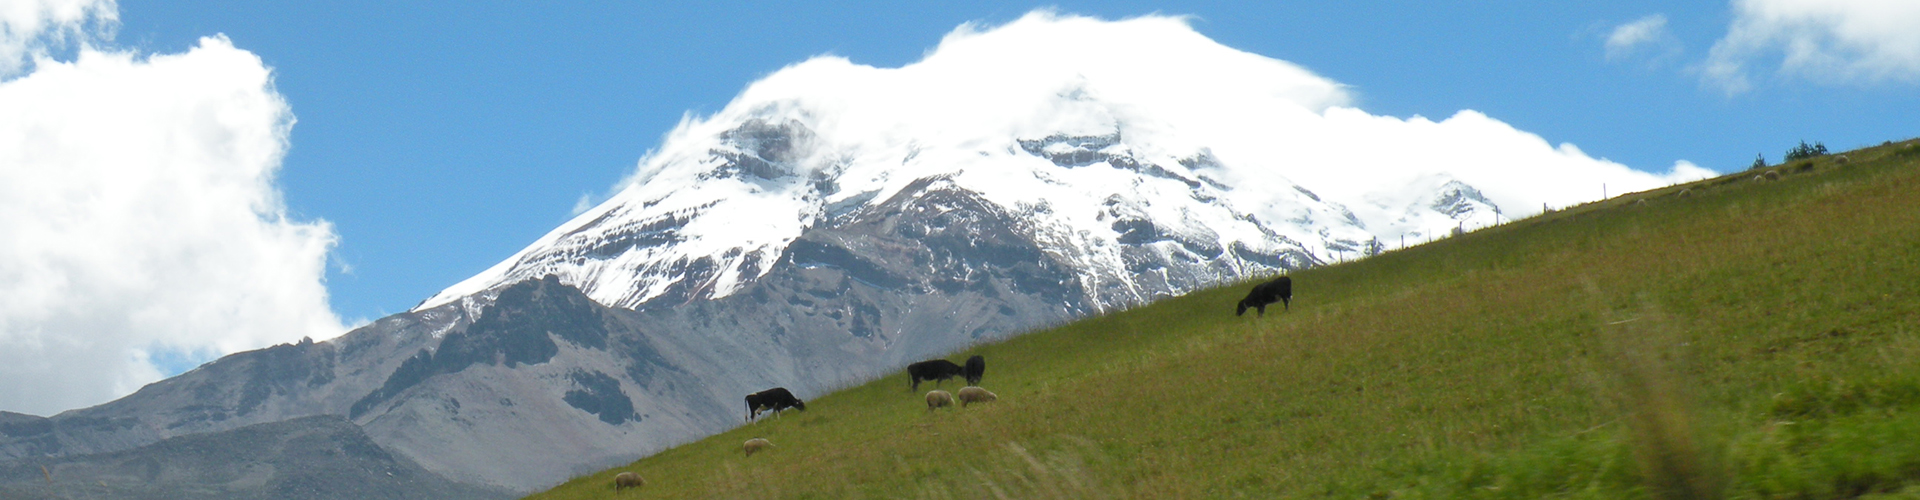 Chimborazo volcano, Ecuadorian highlands. Photo by Emilie Dupuits